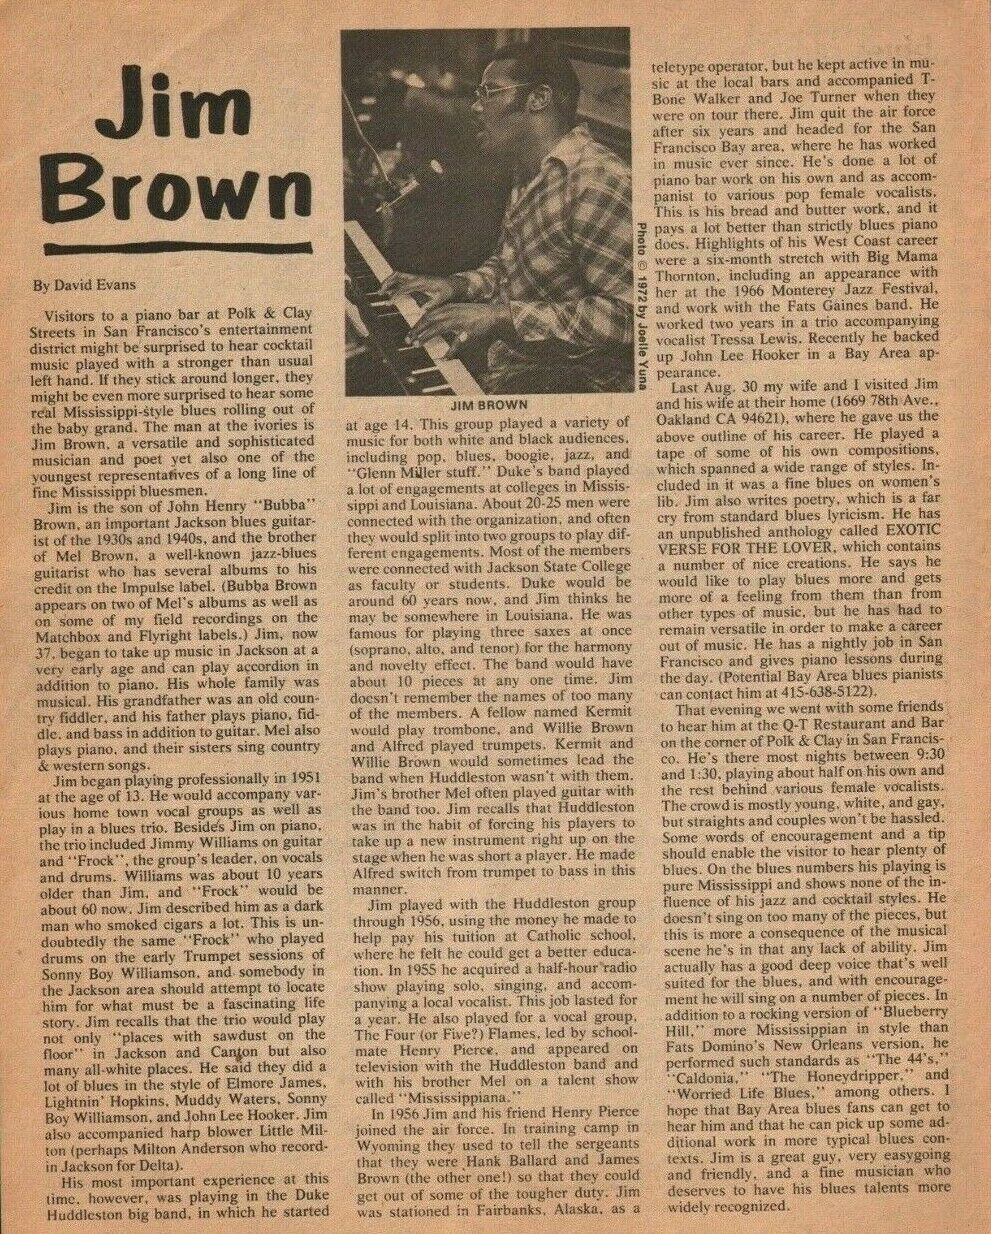 1976 Jim Brown Blues QT Piano Bar Polk & Clay St San Francisco - 1-Page Article